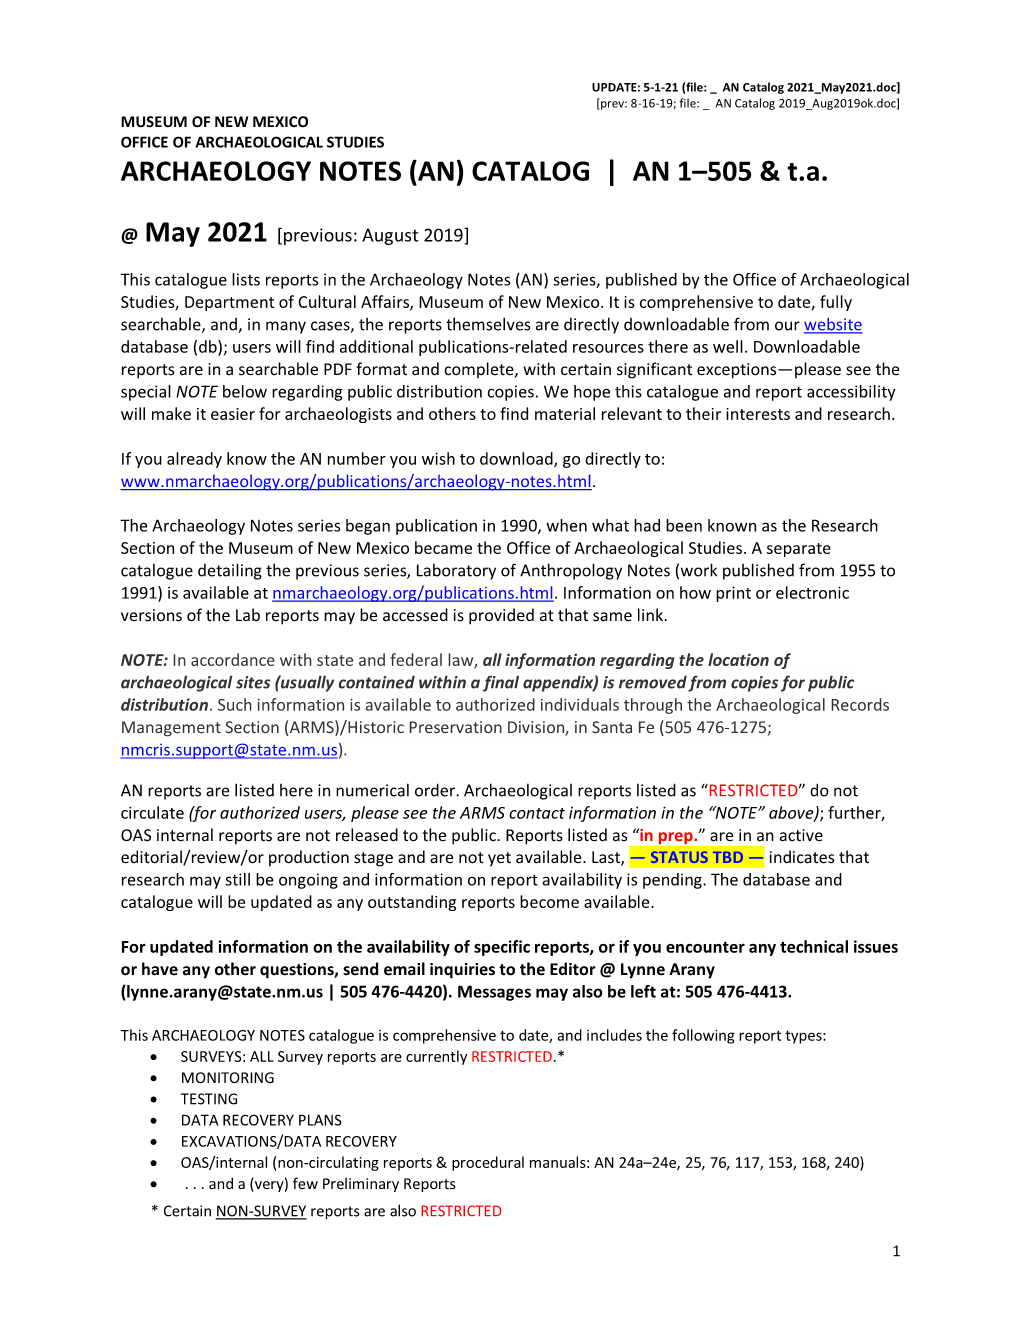 ARCHAEOLOGY NOTES (AN) CATALOG | an 1–505 & T.A